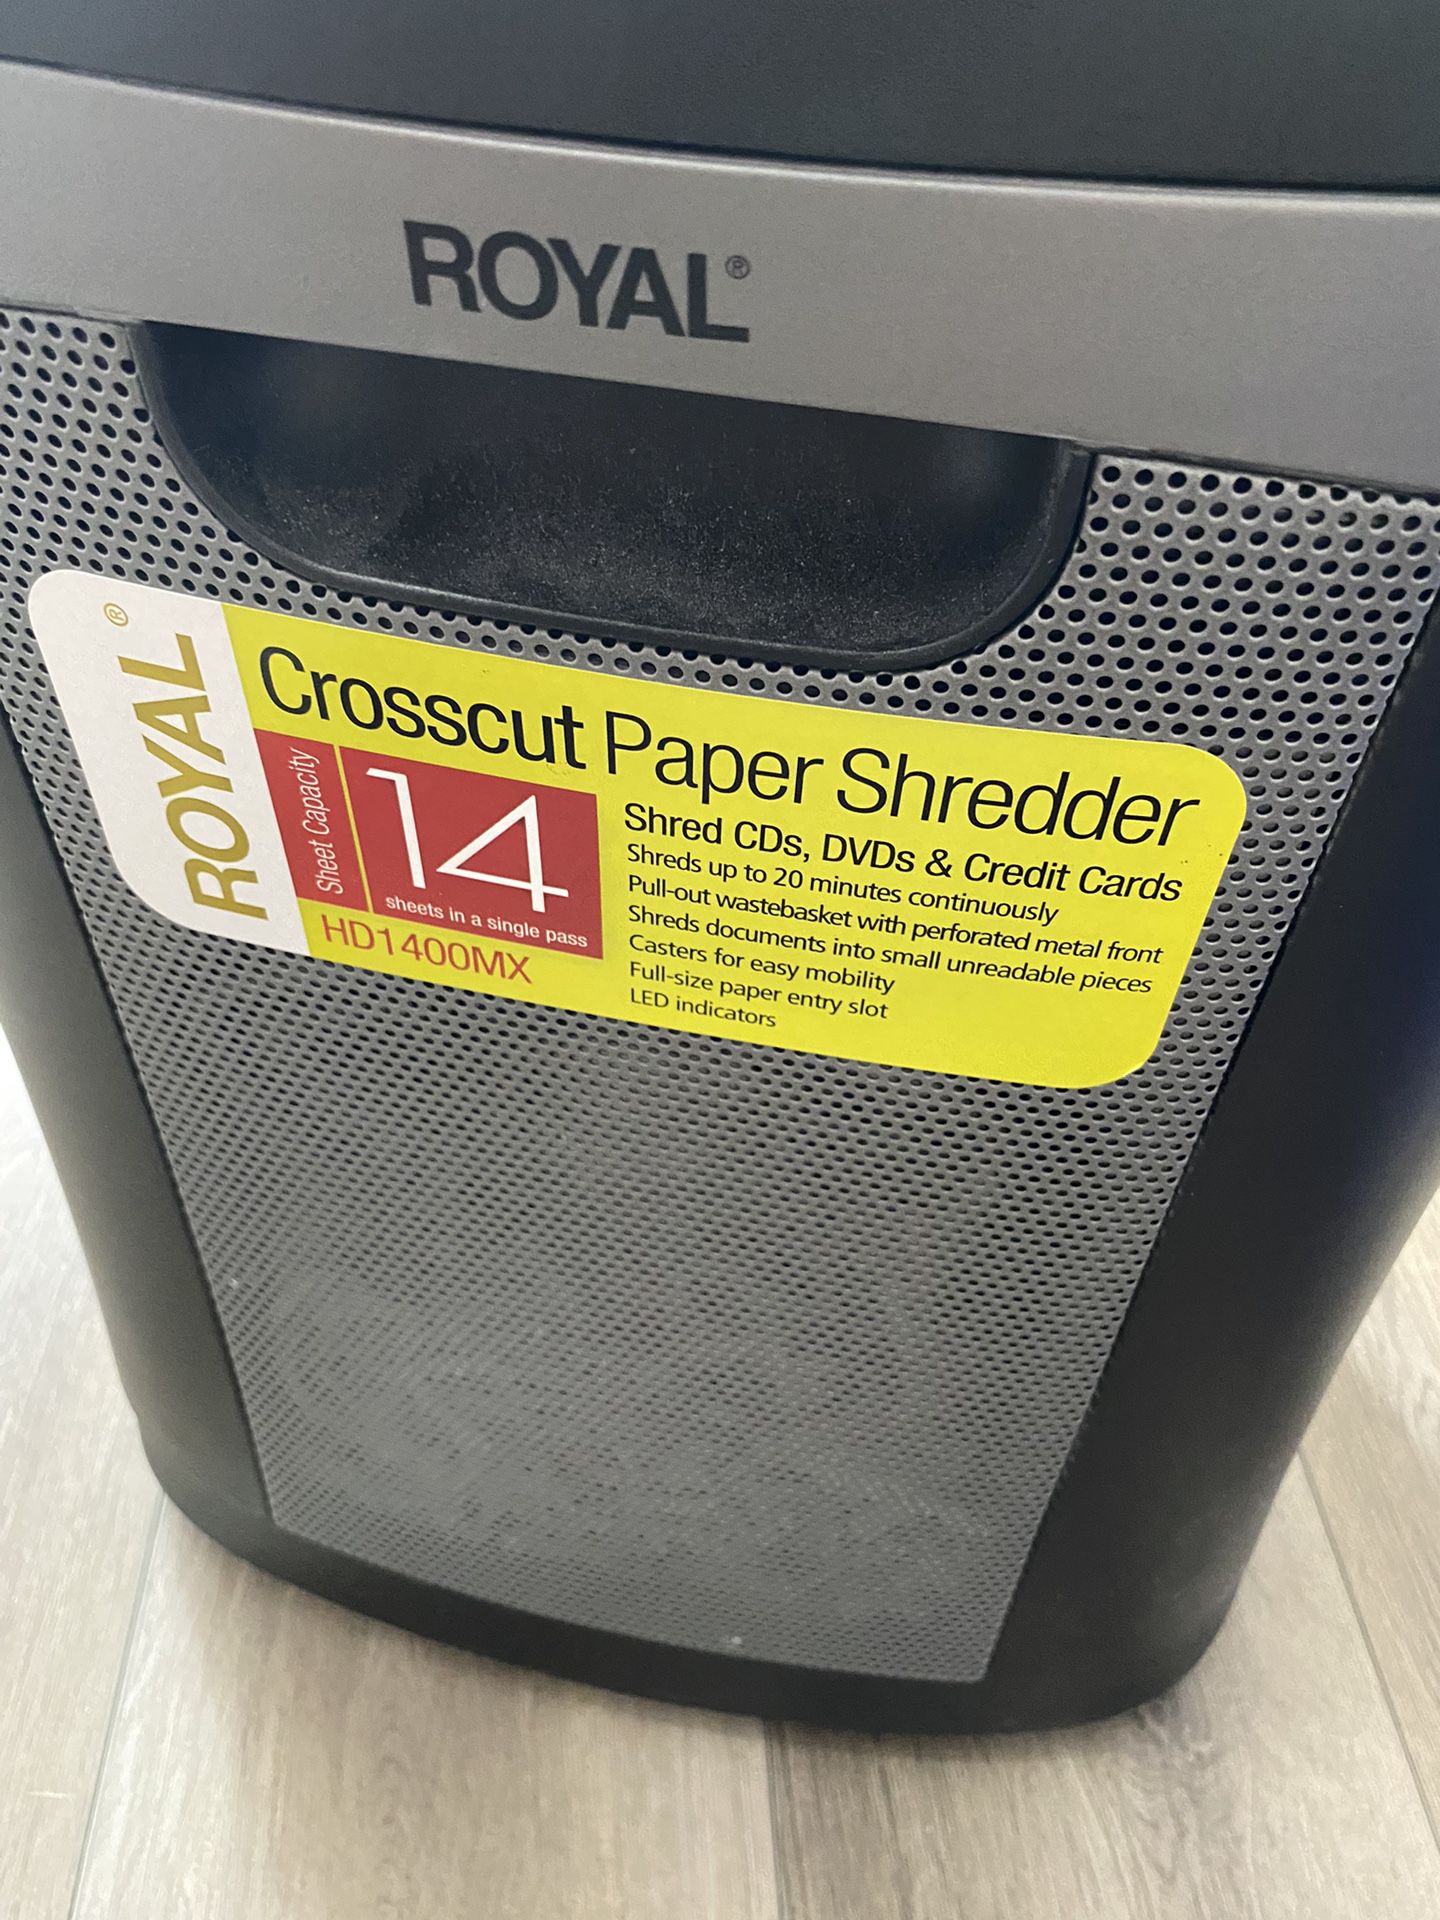 Royal HD1400MX Crosscut Shredder - Royal